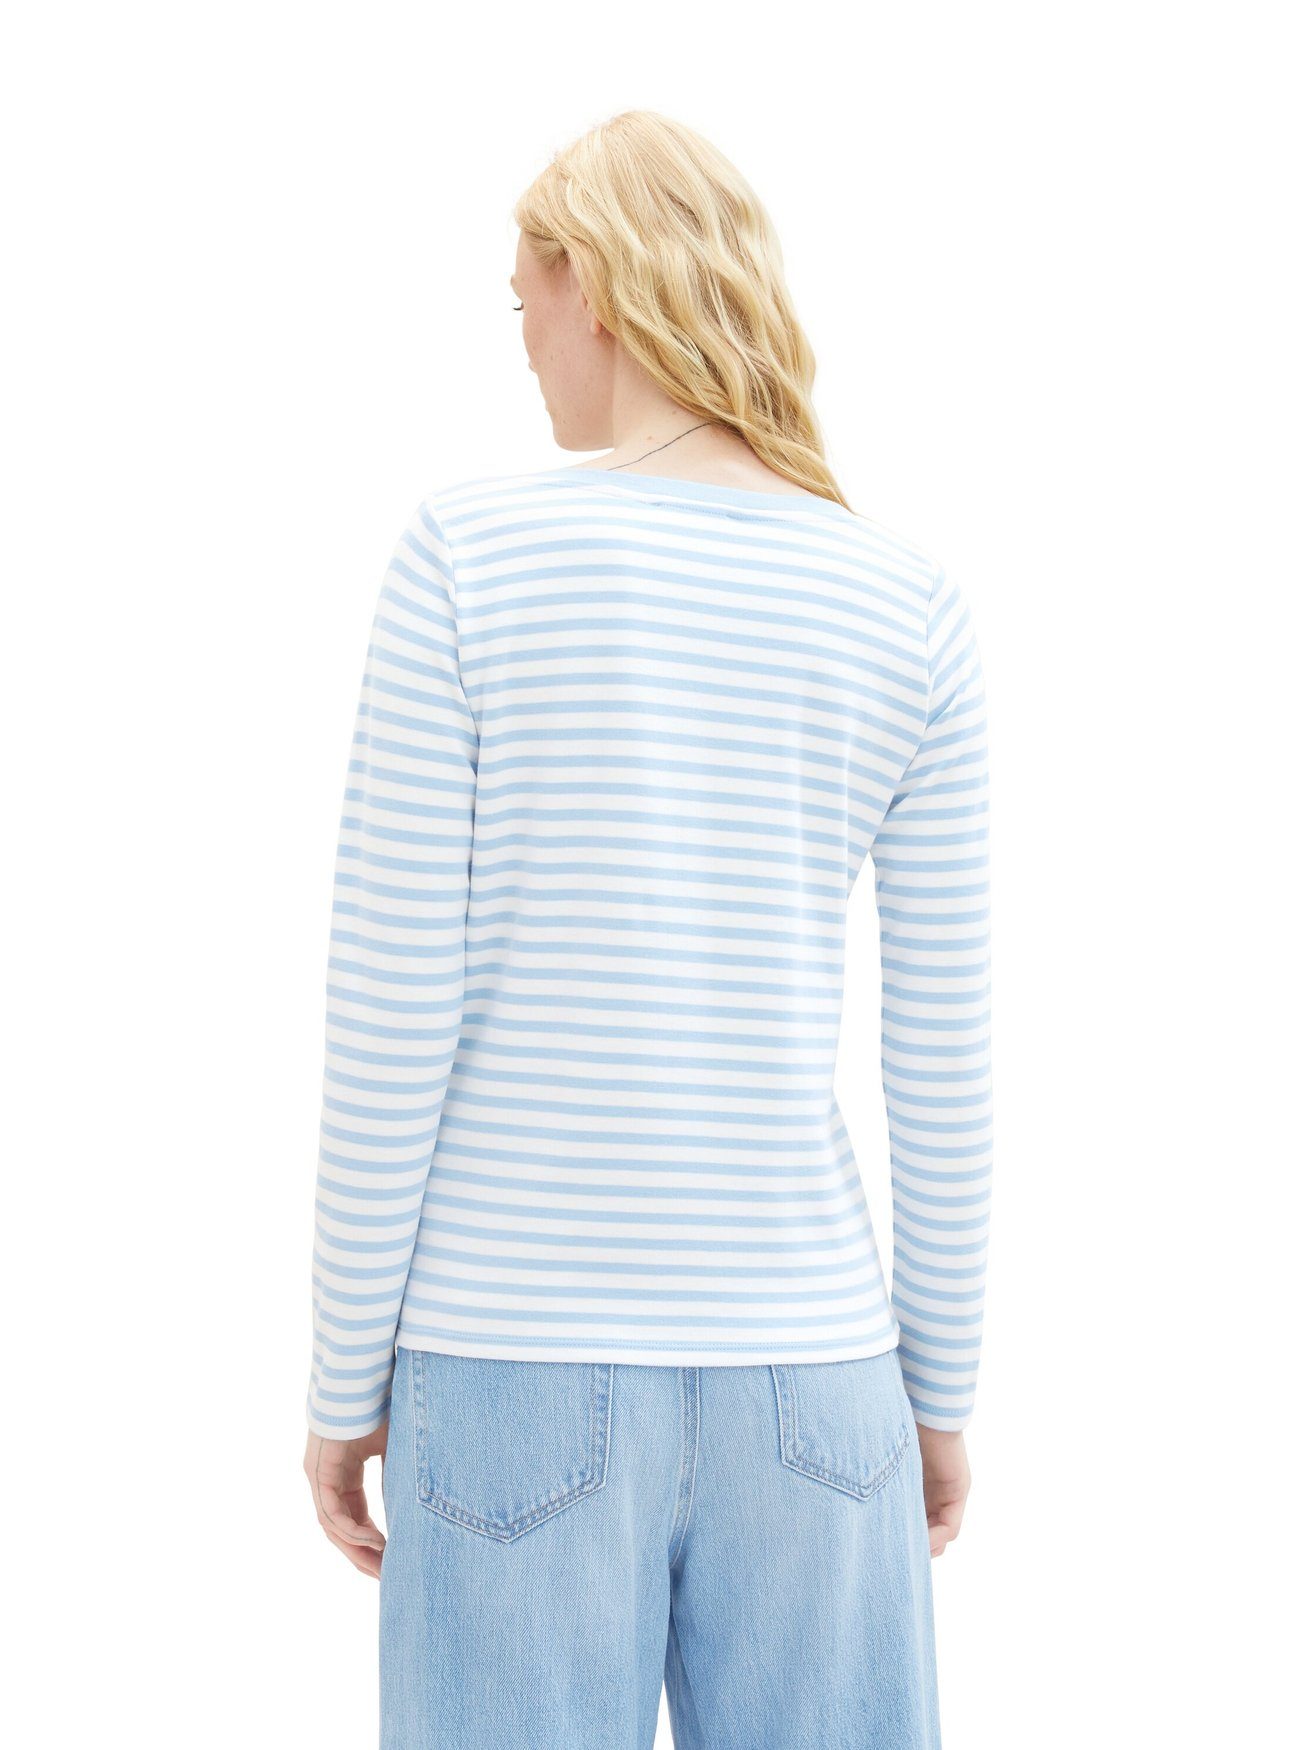 T-Shirt Shirt Pullover Gestreiftes TAILOR TOM Basic 6287 in Langarm Blau